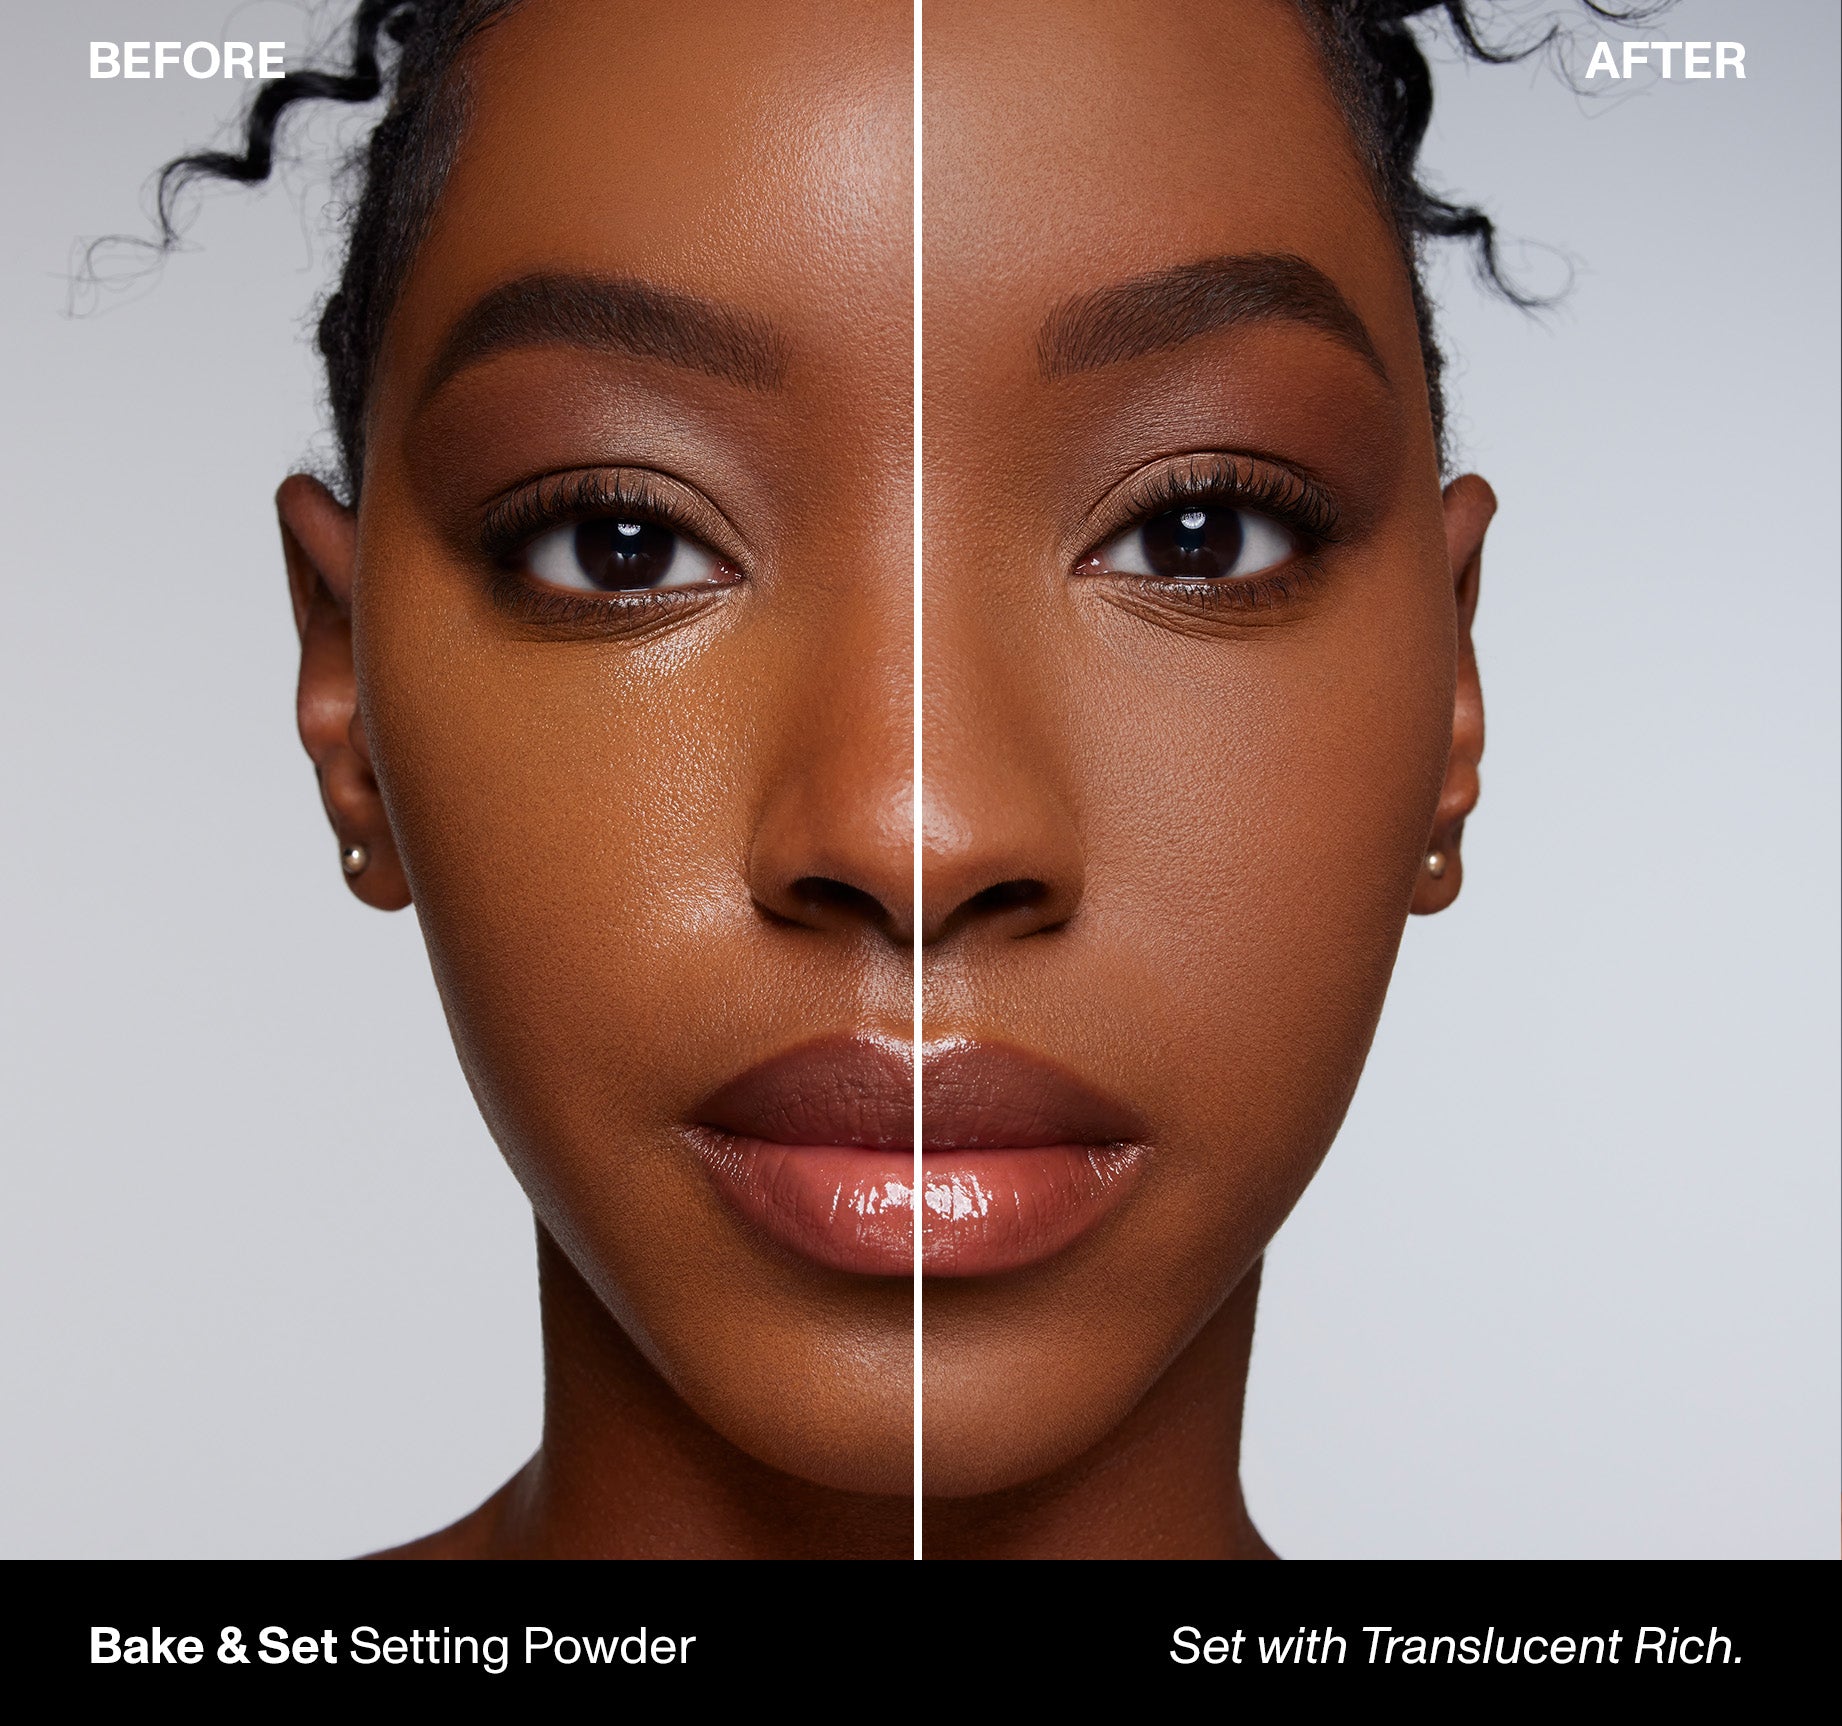 Bake & Set Soft Focus Setting Powder - Translucent Rich | Morphe